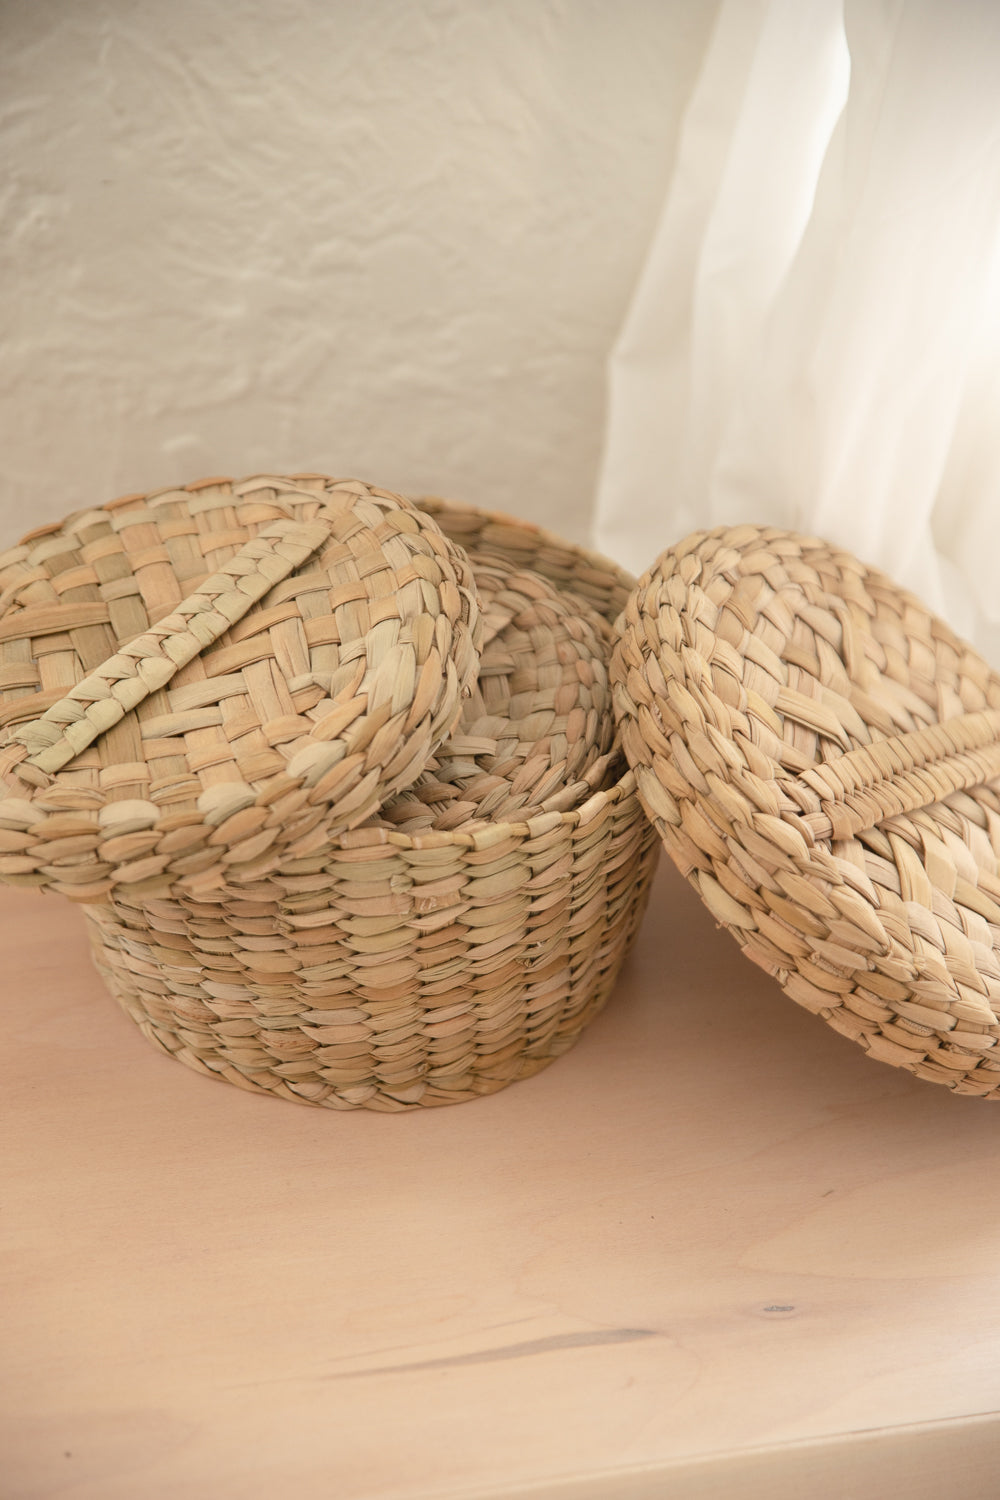 3 Nesting Baskets